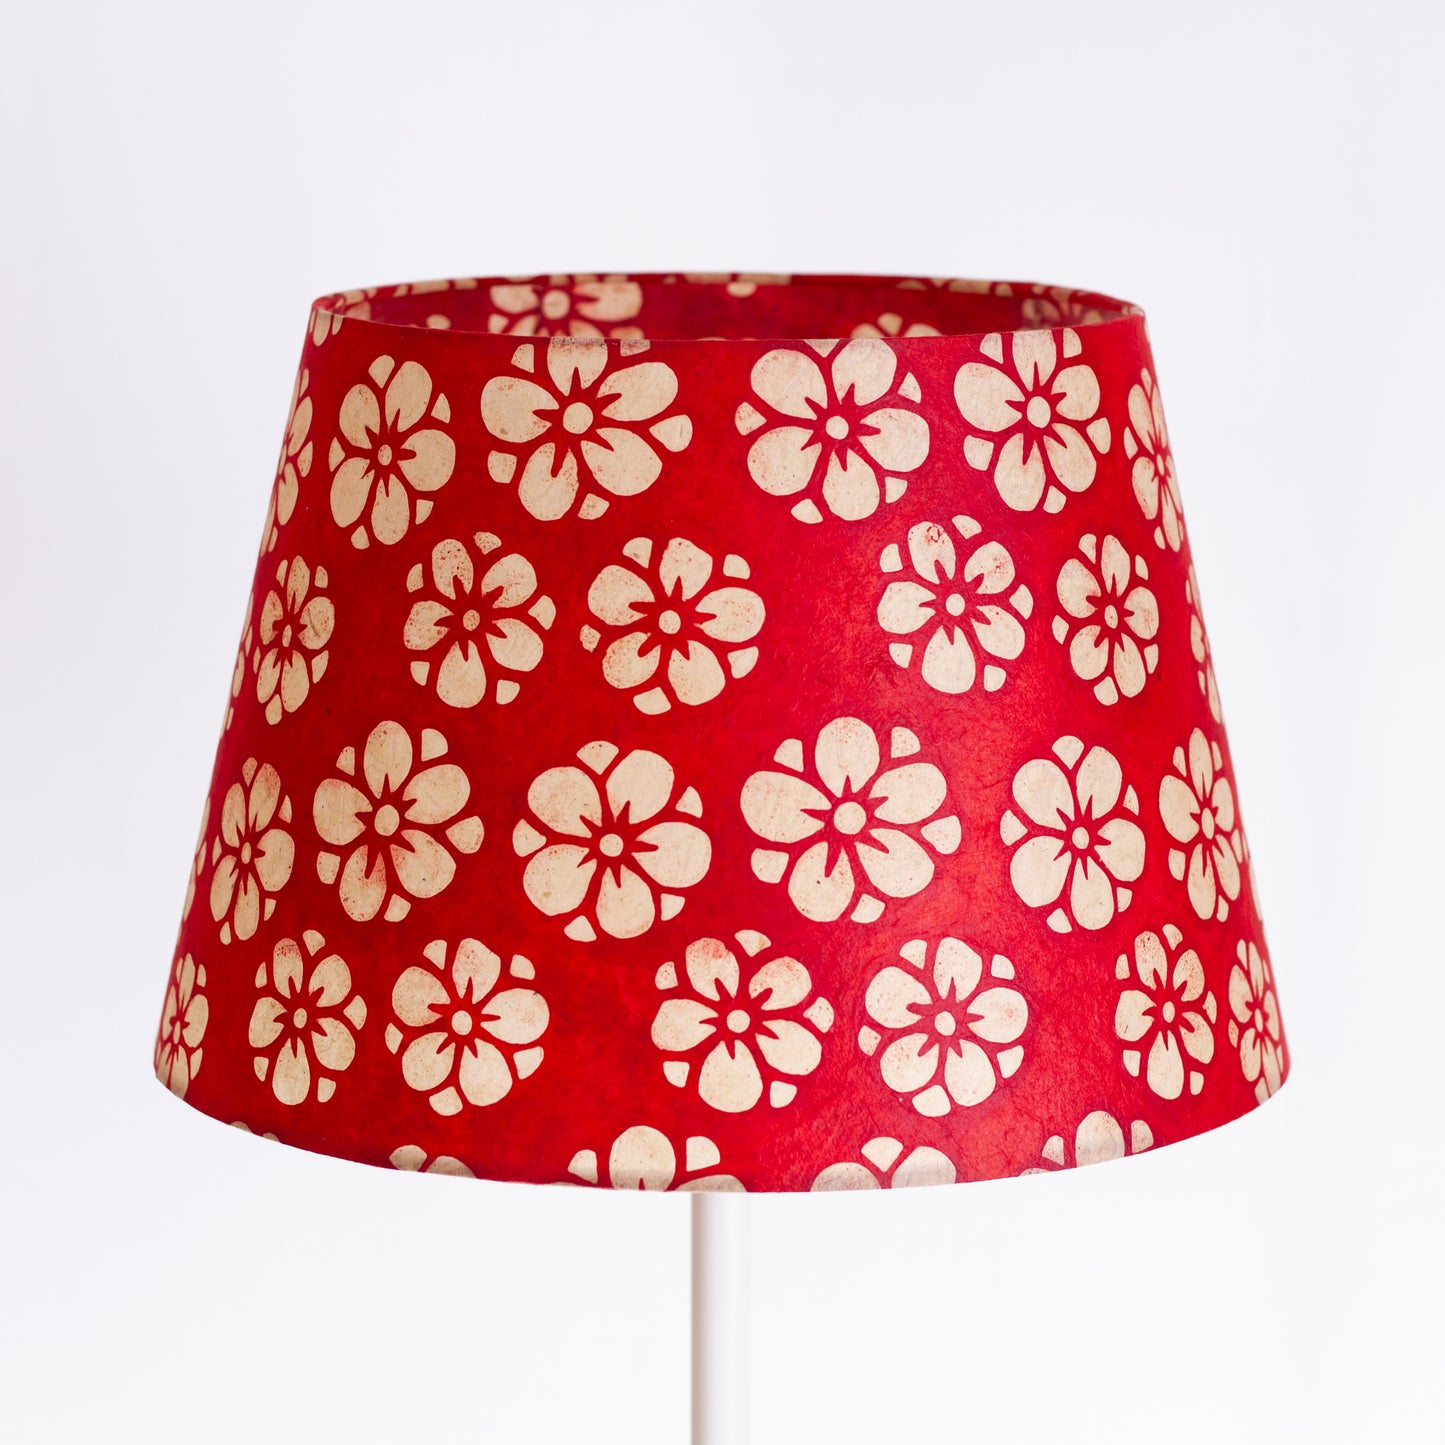 Conical Lamp Shade P76 - Batik Star Flower Red, 25cm(top) x 35cm(bottom) x 23cm(height)